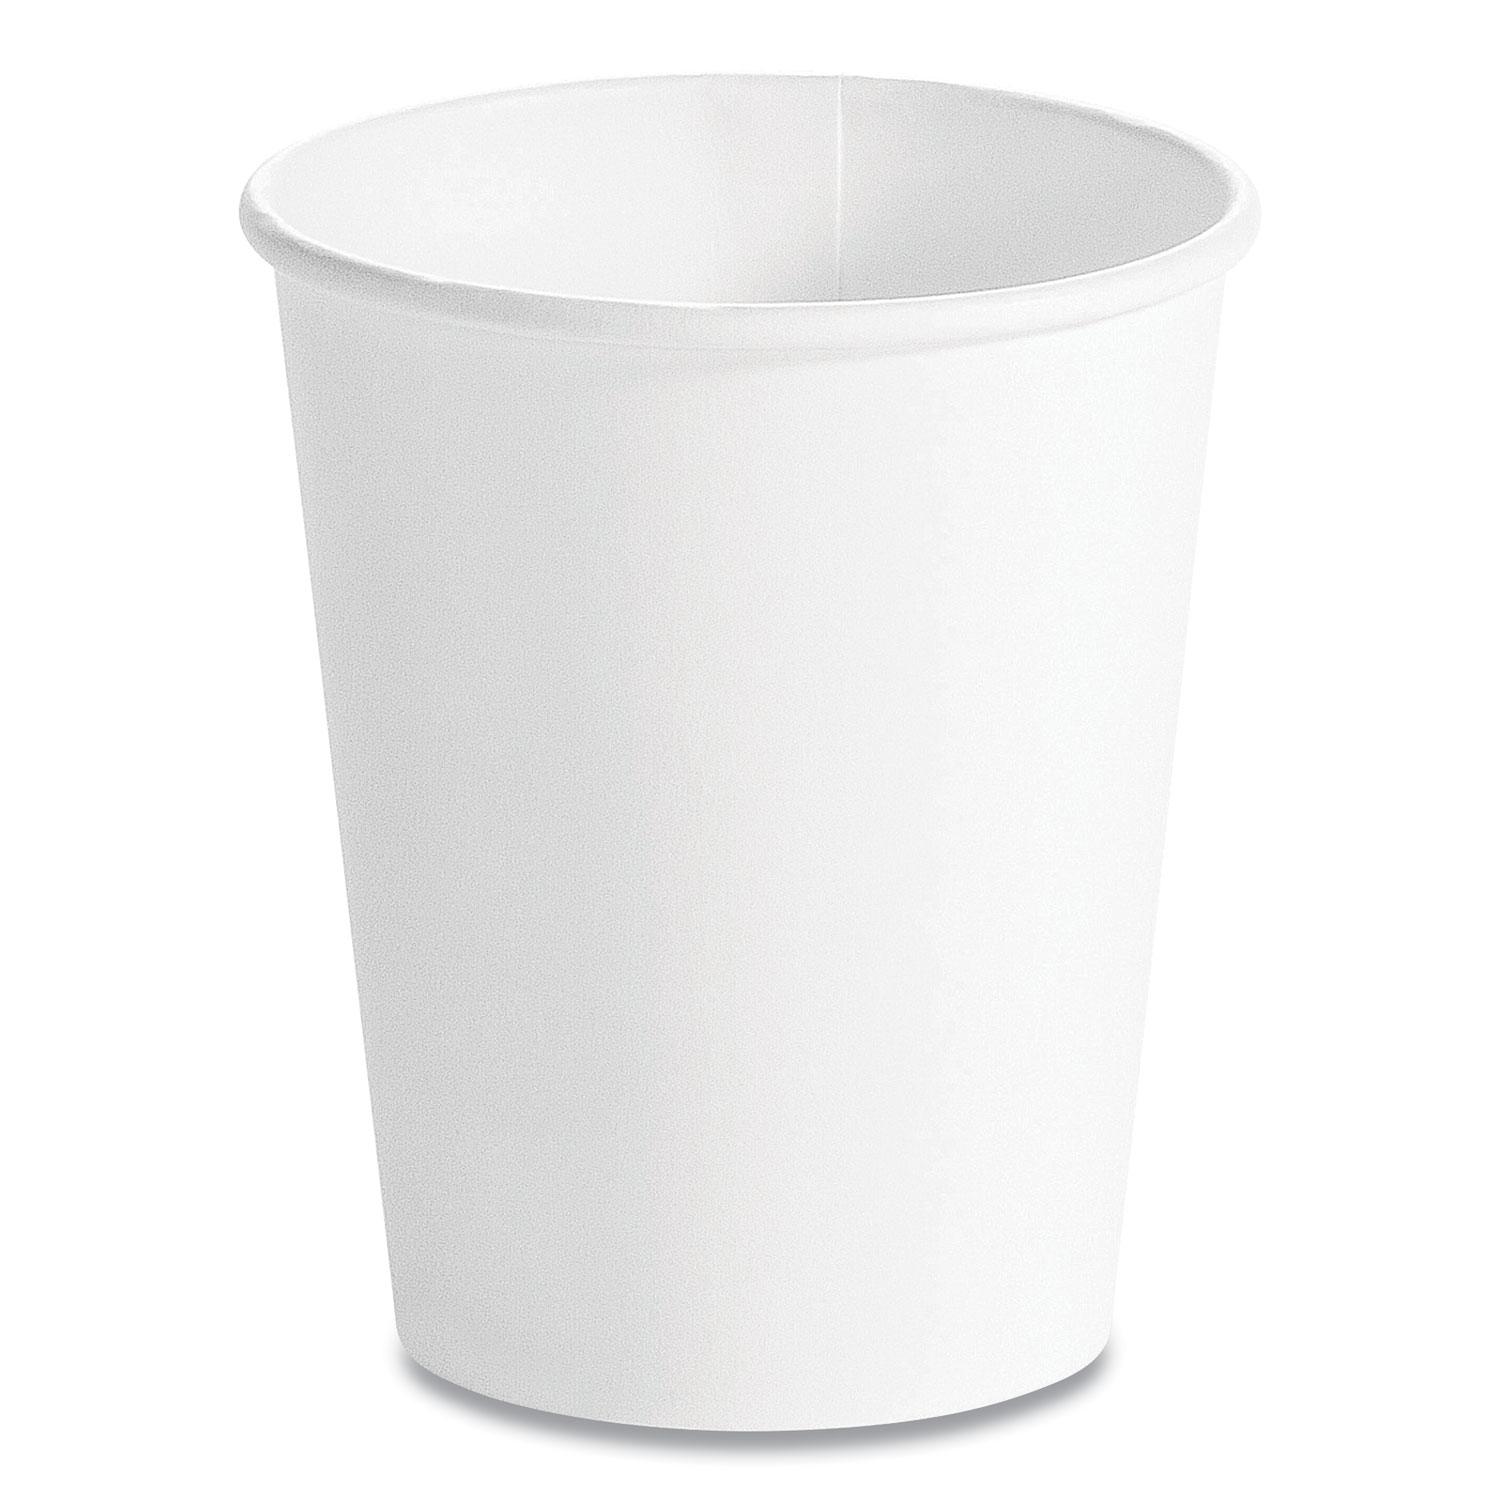  Huhtamaki 62902 Single Wall Hot Cups 12 oz, White, 1,000/Carton (HUH62902) 